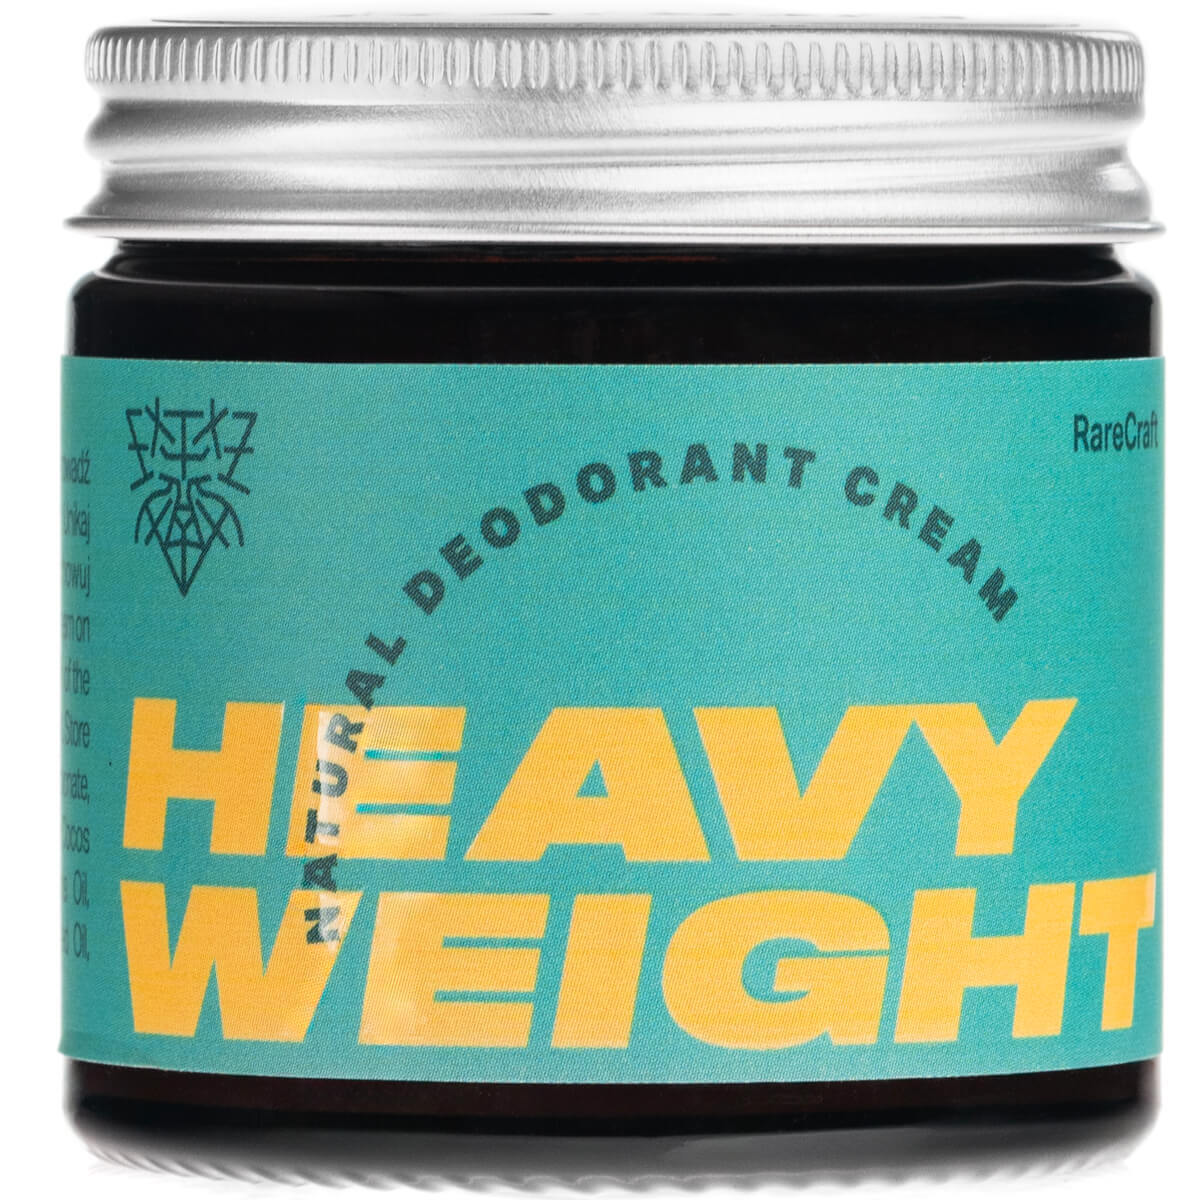 RareCraft Heavyweight, Deodorant Cream